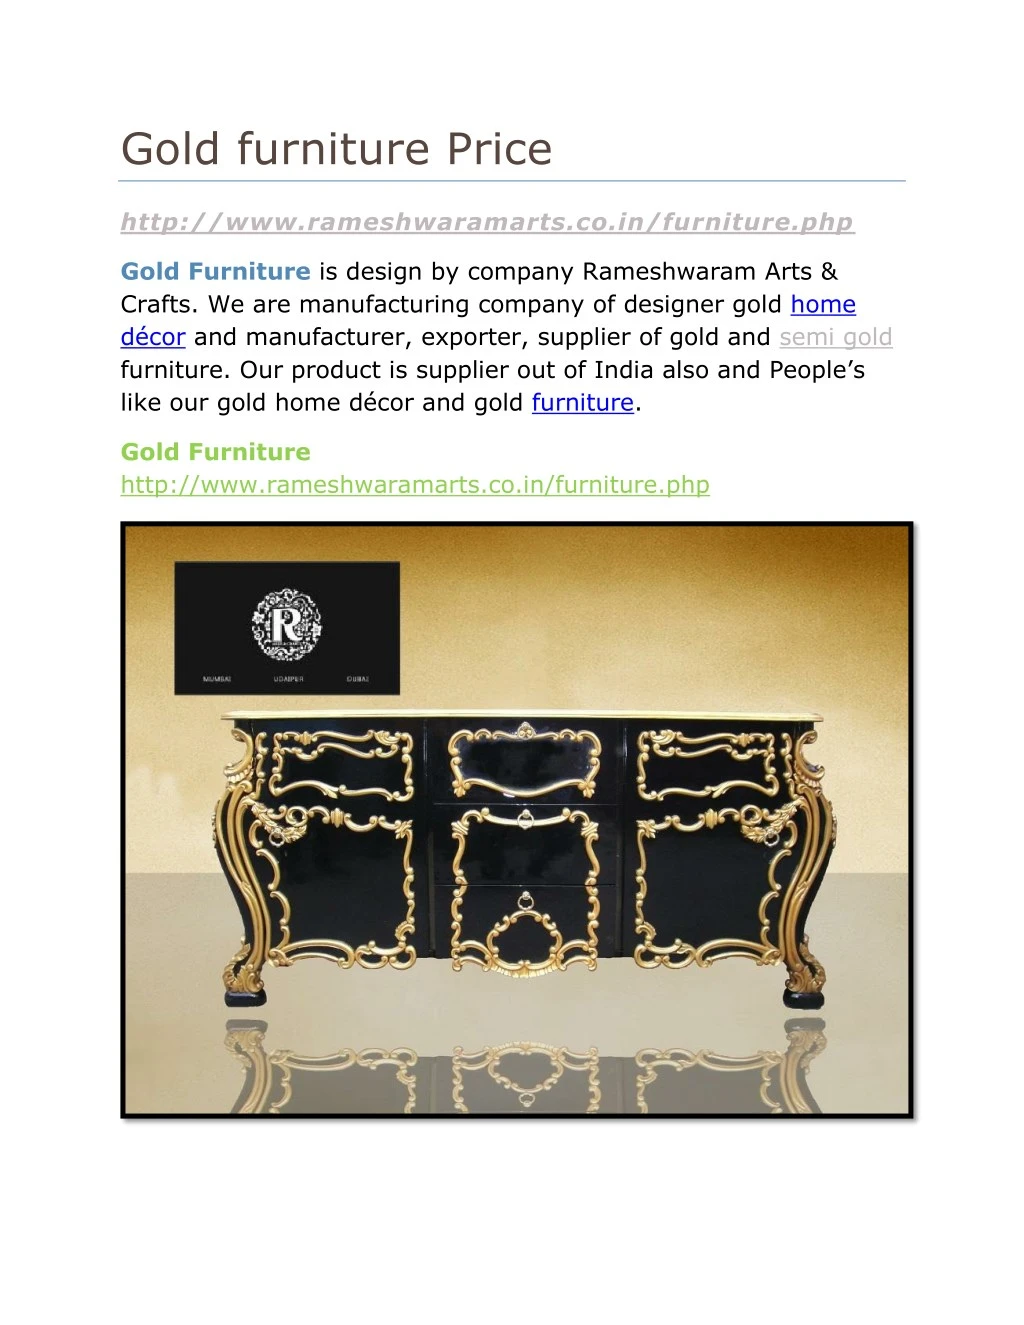 gold furniture price